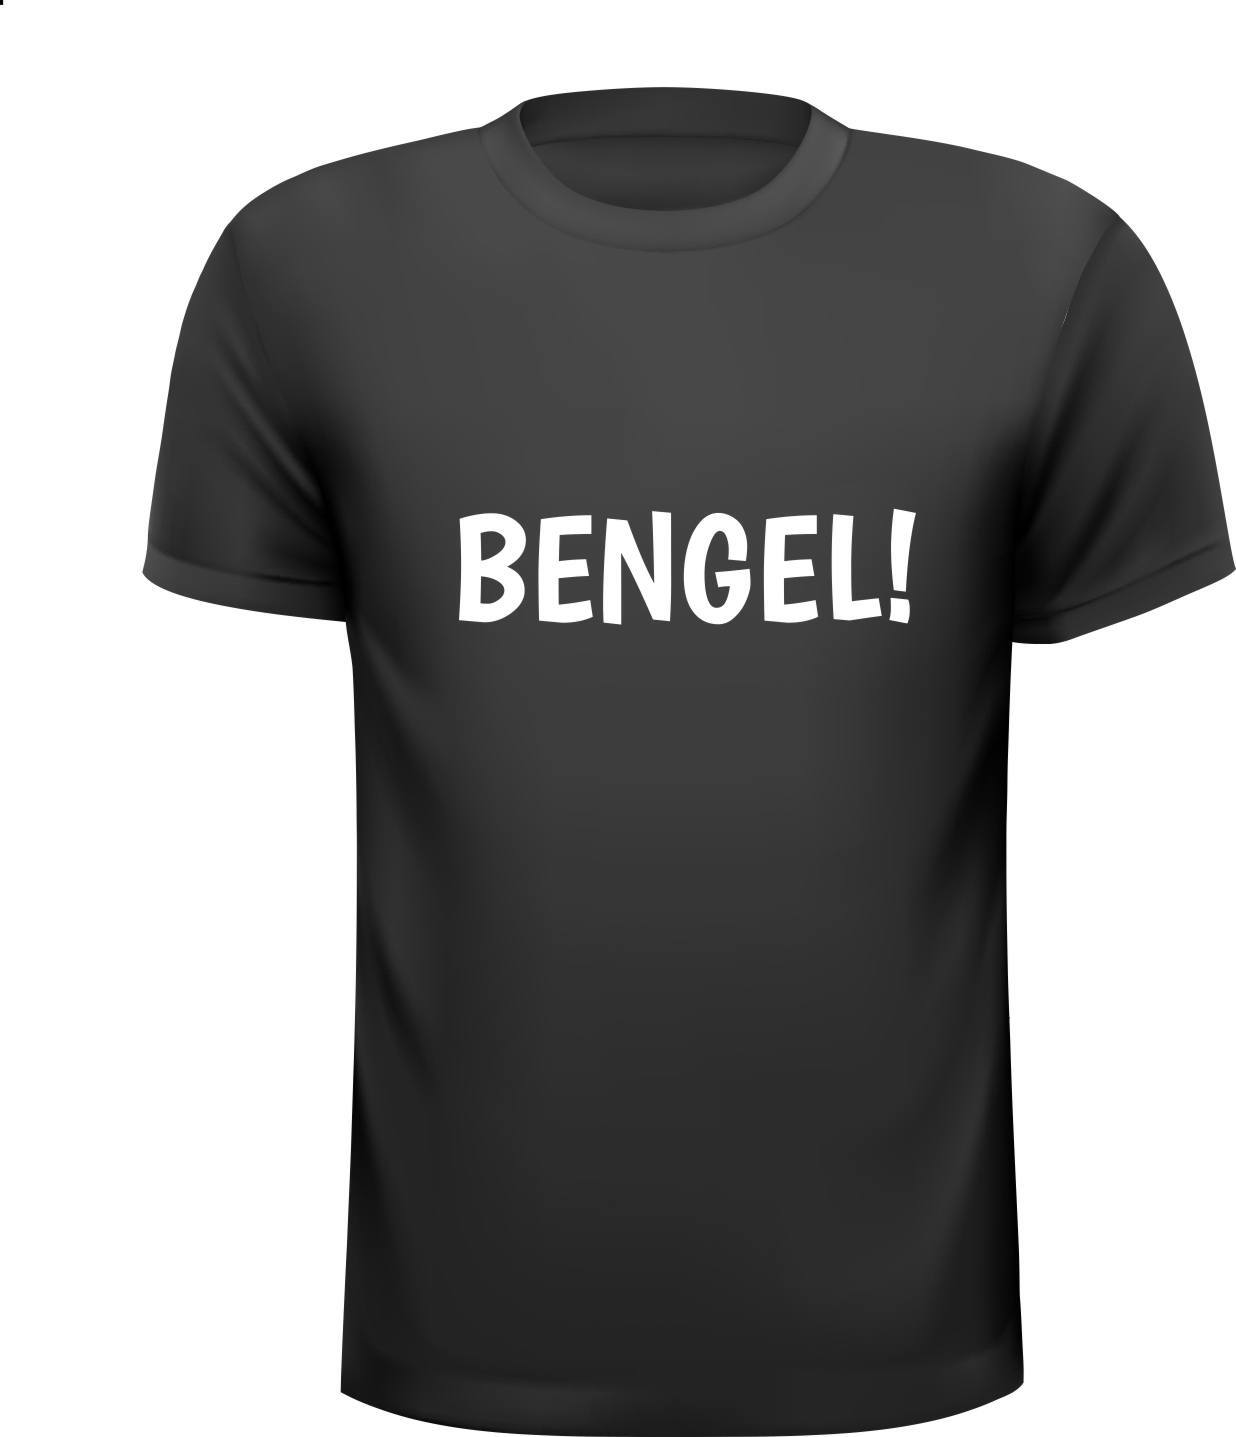 T-shirt Bengel boef ondeugd